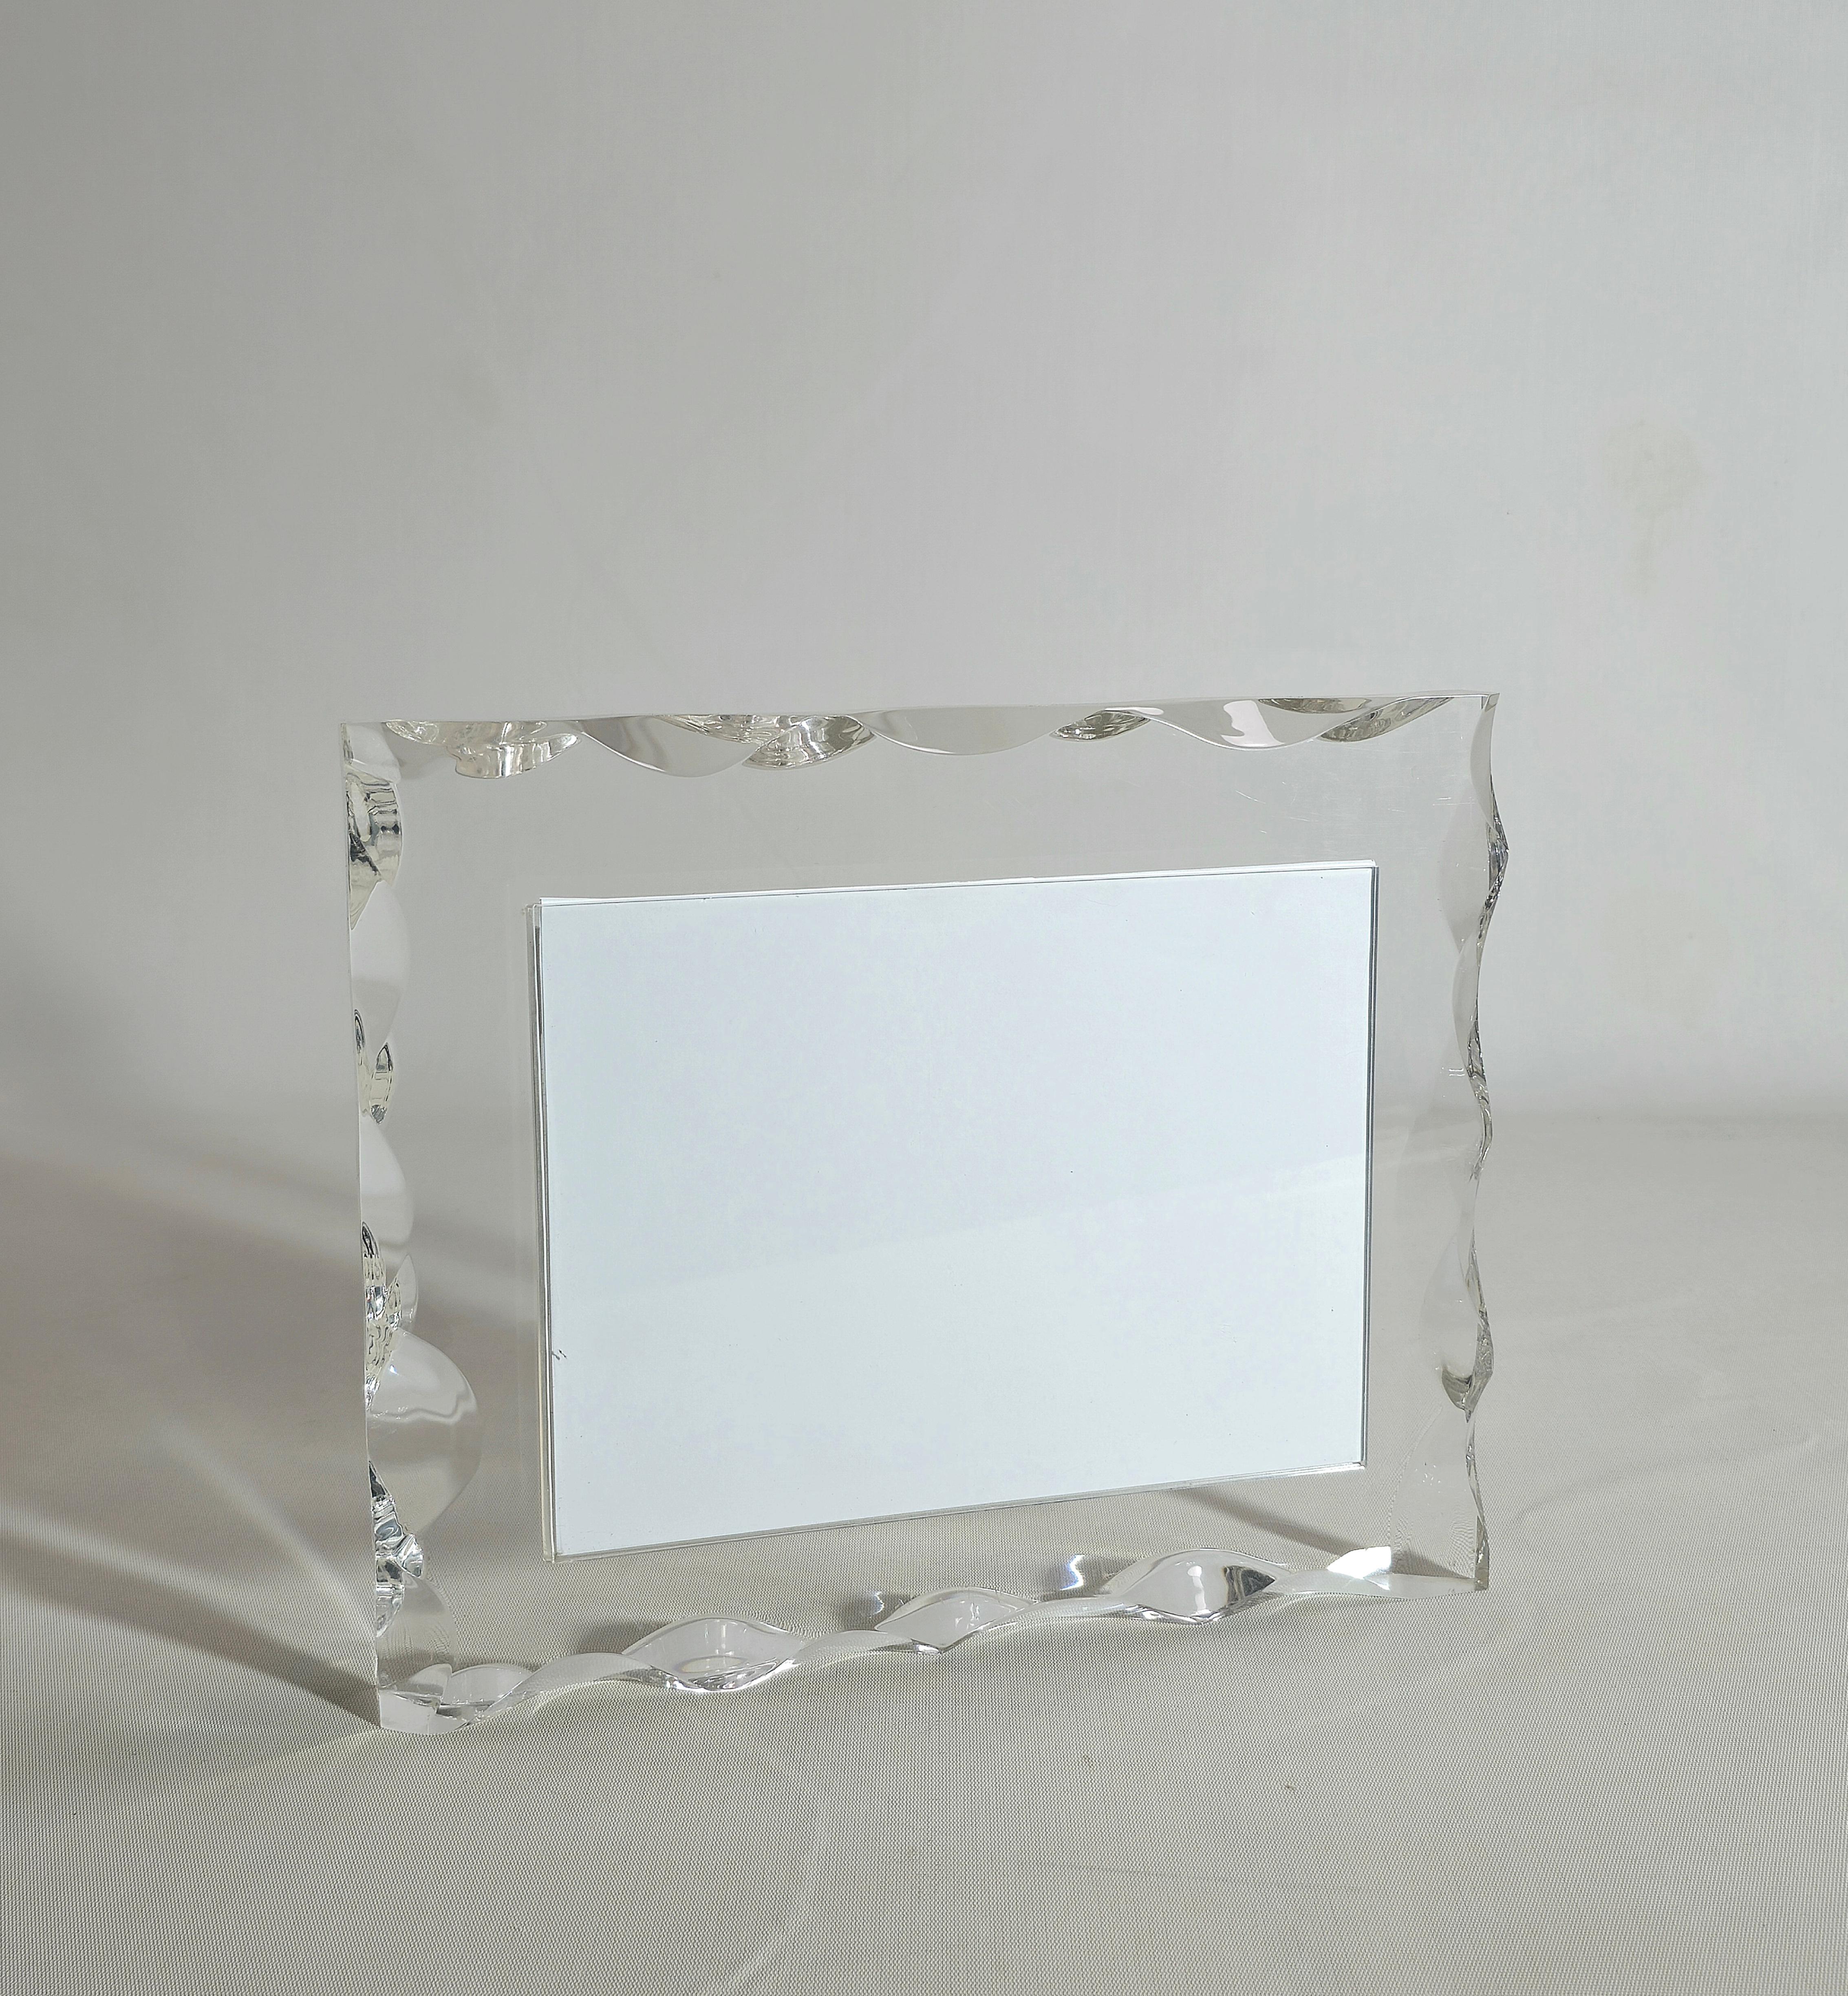 Decorative Object Picture Frame Plexglass Midcentury Italian Design 1980s For Sale 4